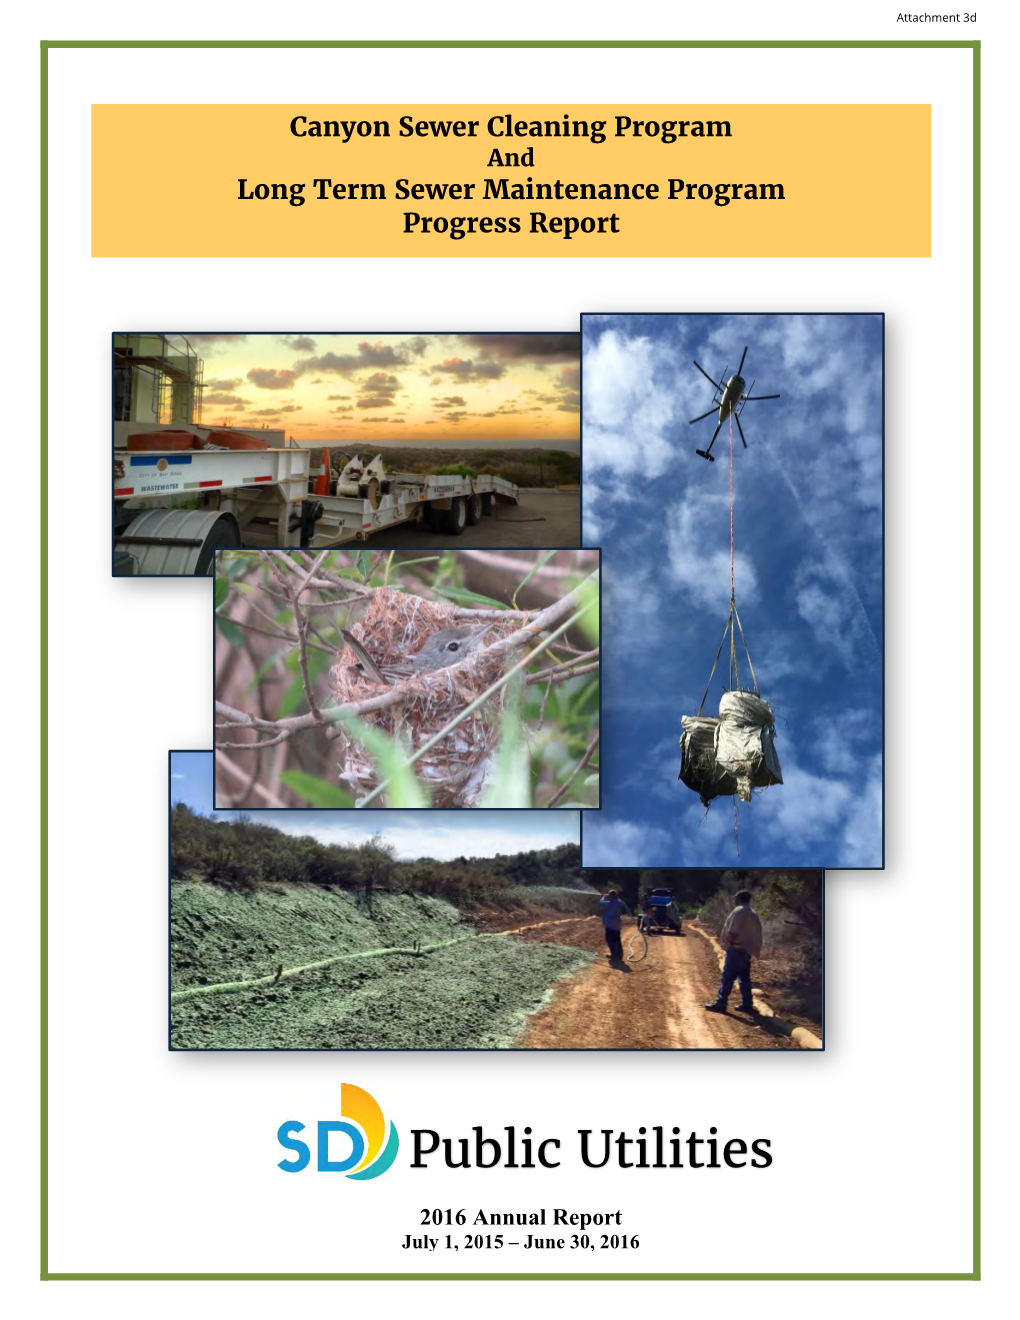 Canyon Sewer Cleaning Program and Long Term Sewer Maintenance Program Progress Report